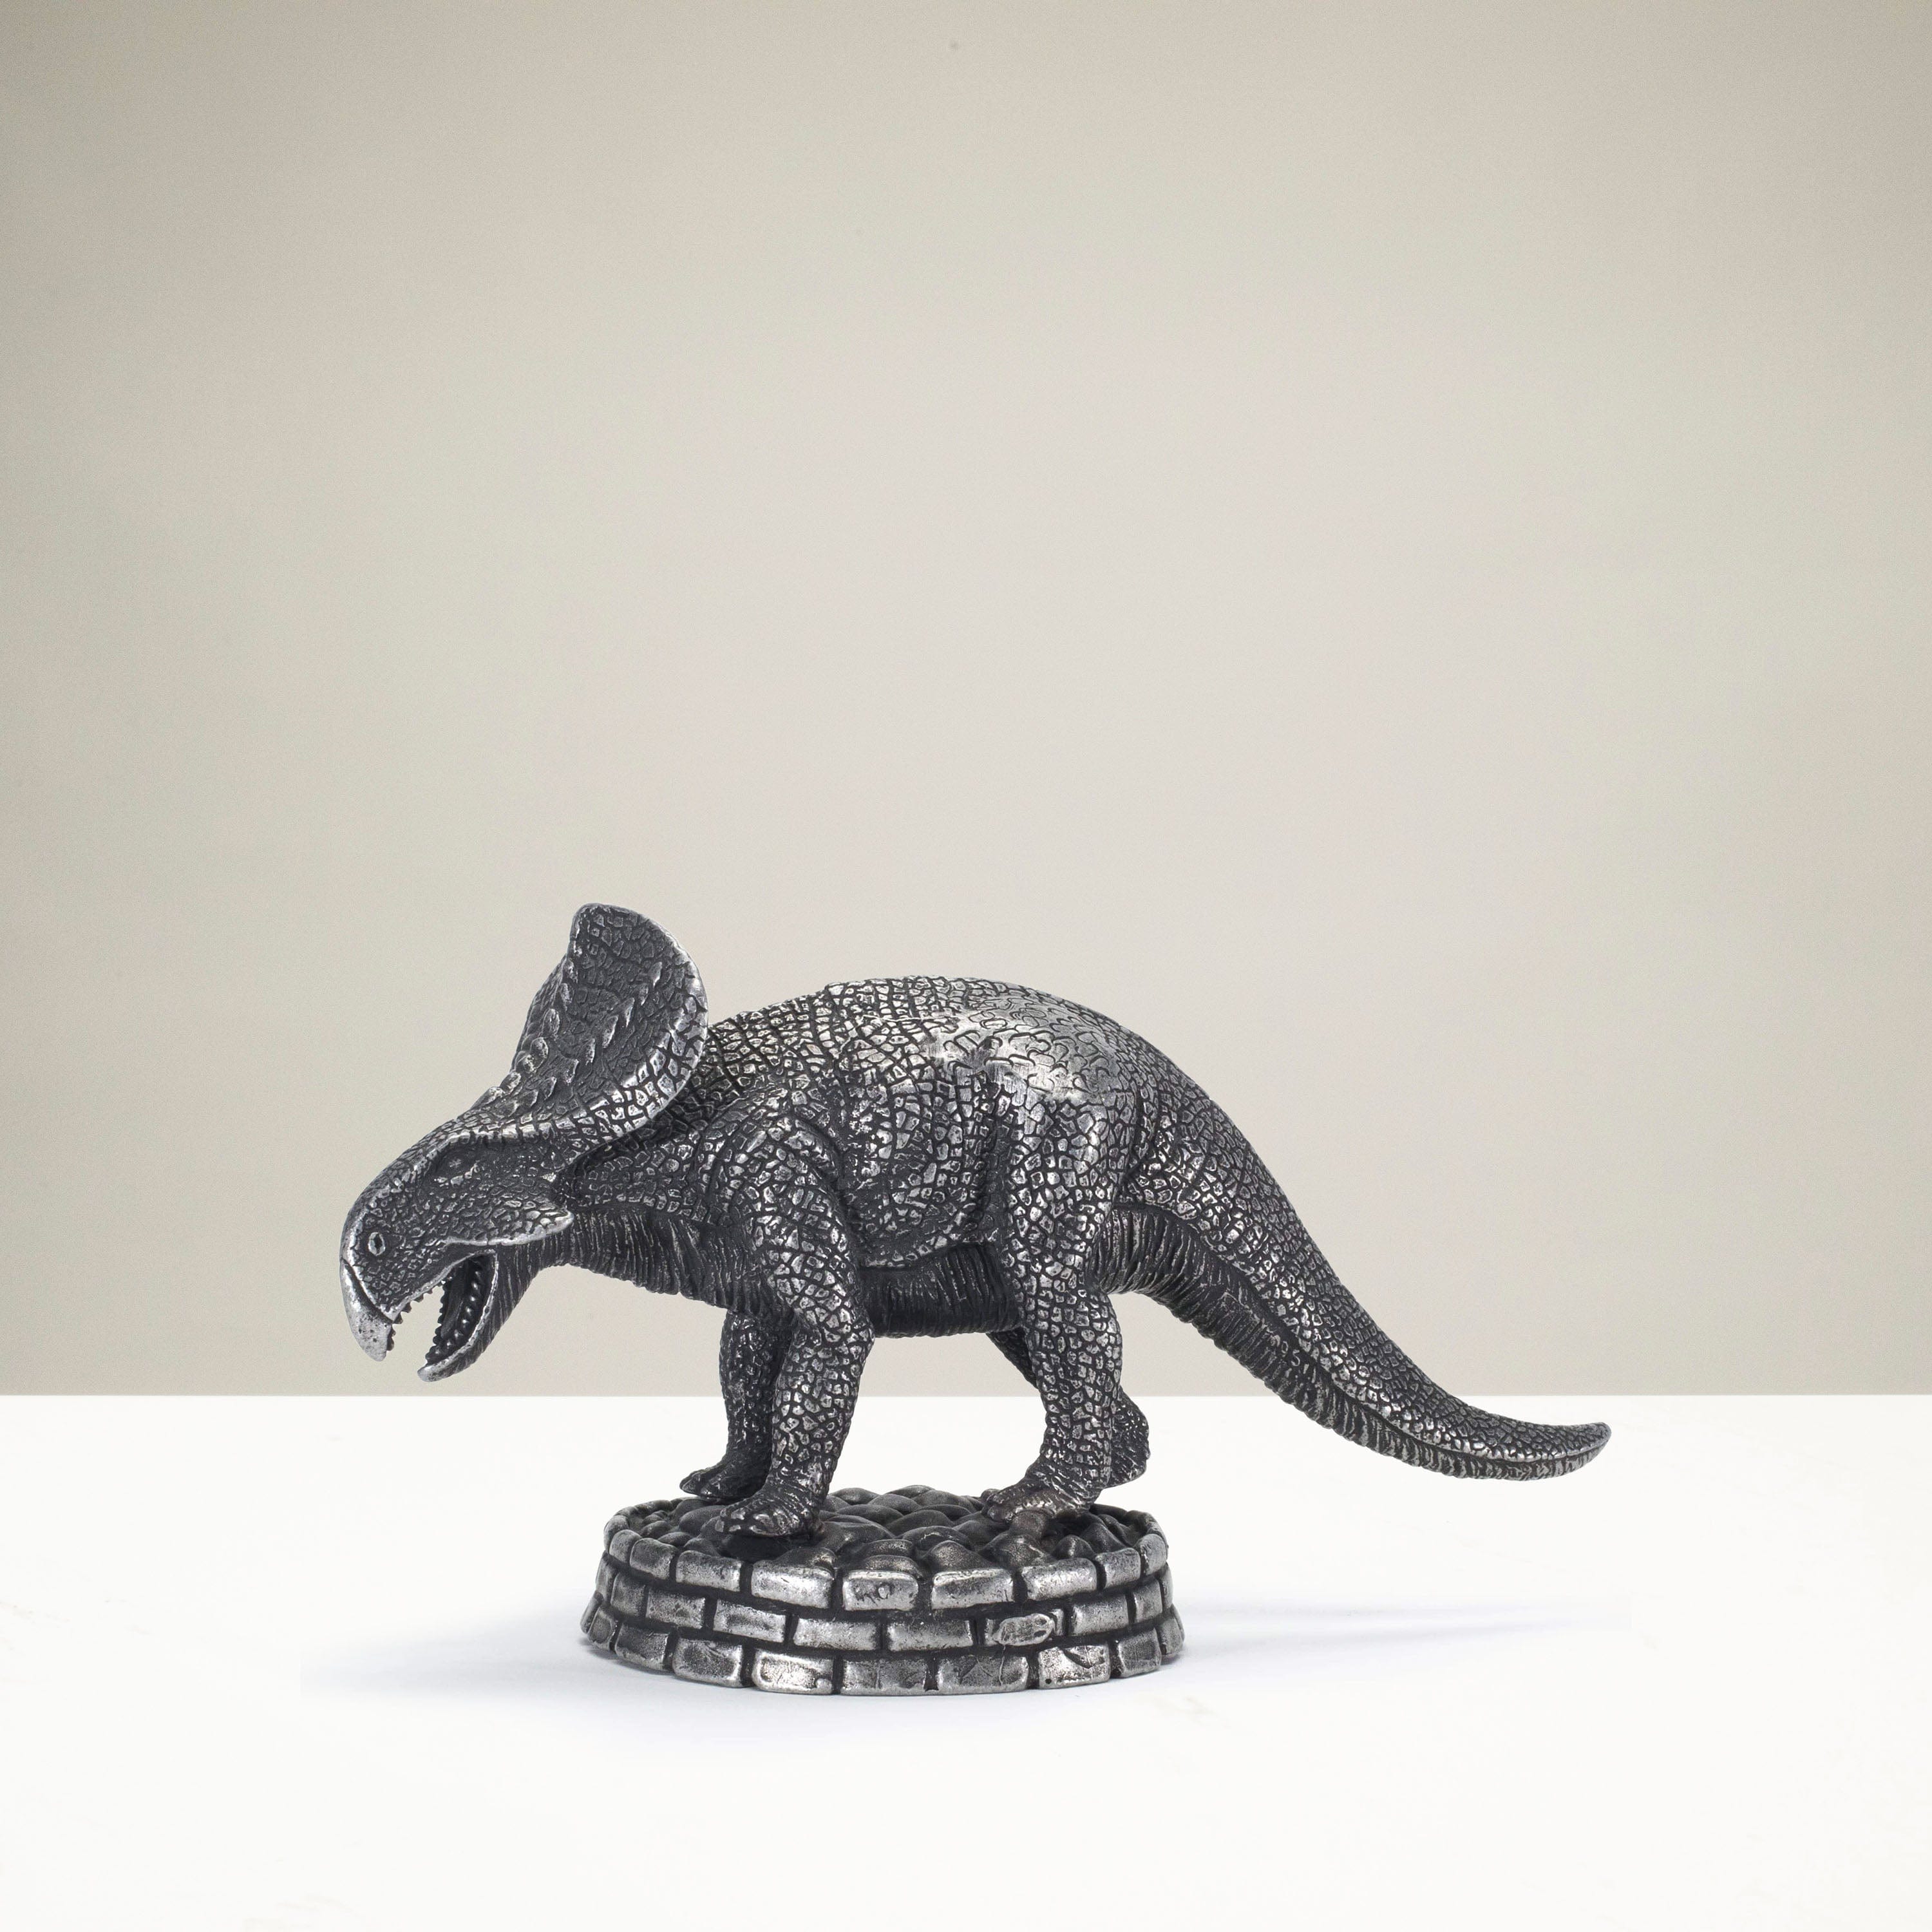 Kalifano Recycled Metal Art Achelousaurus Dinosaur Stainless Steel Hand Made Carving CV400-SS-AC